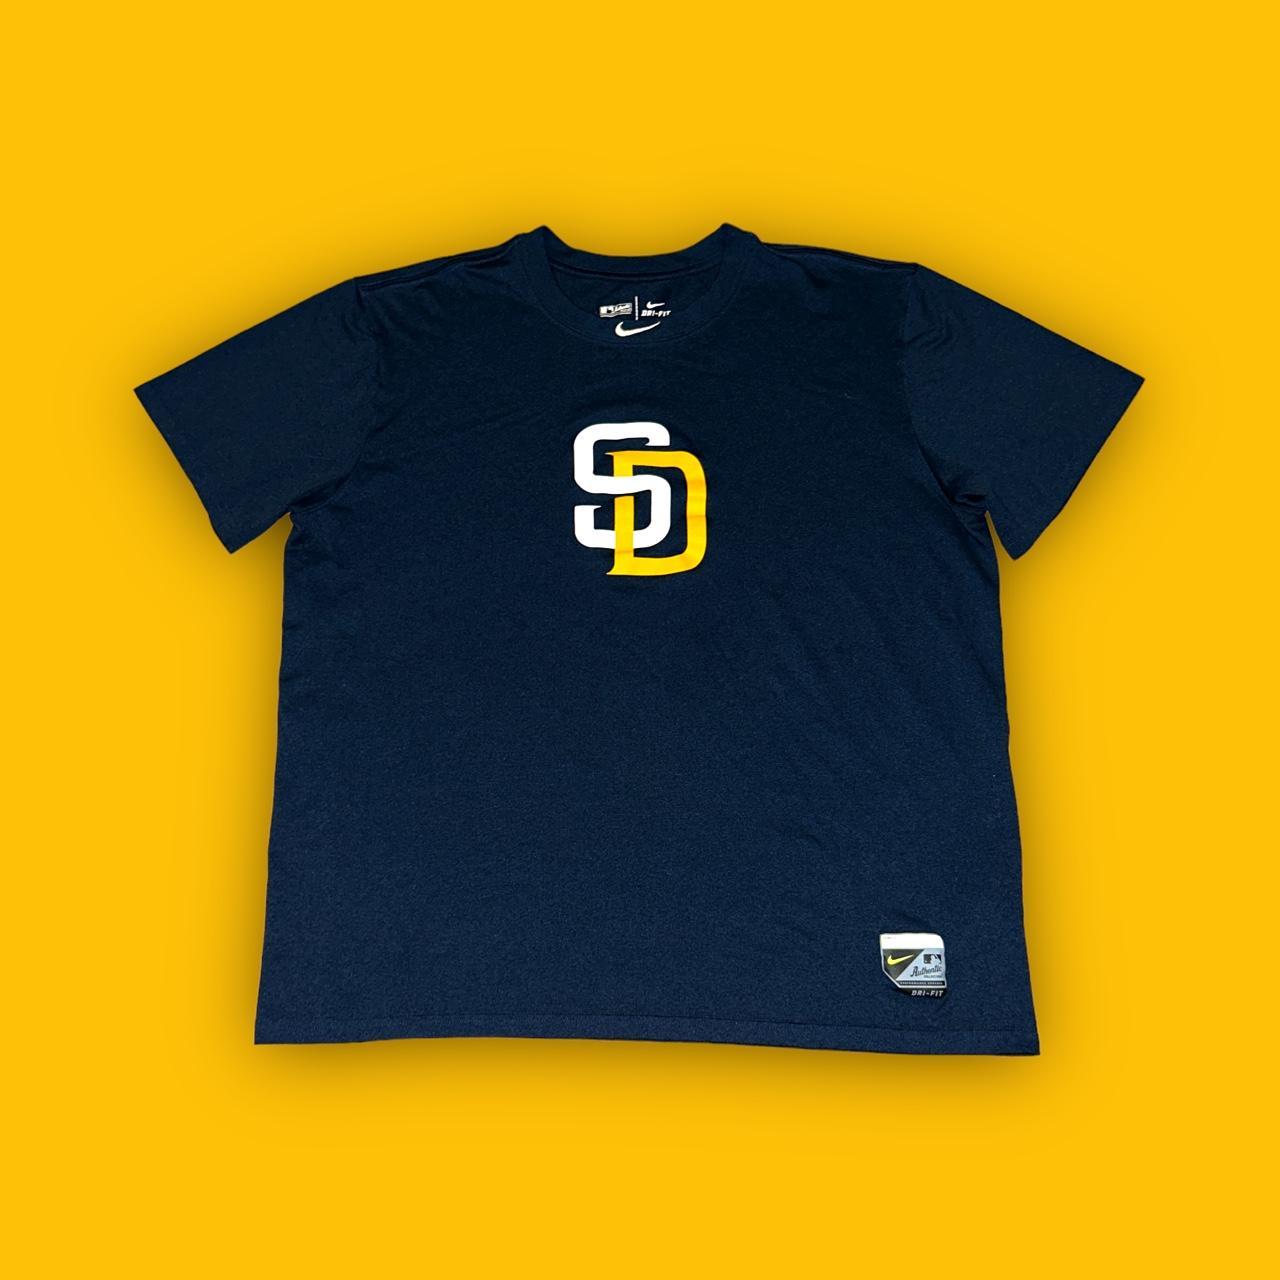 San Diego padres Nike shirt Era: modern Condition - Depop